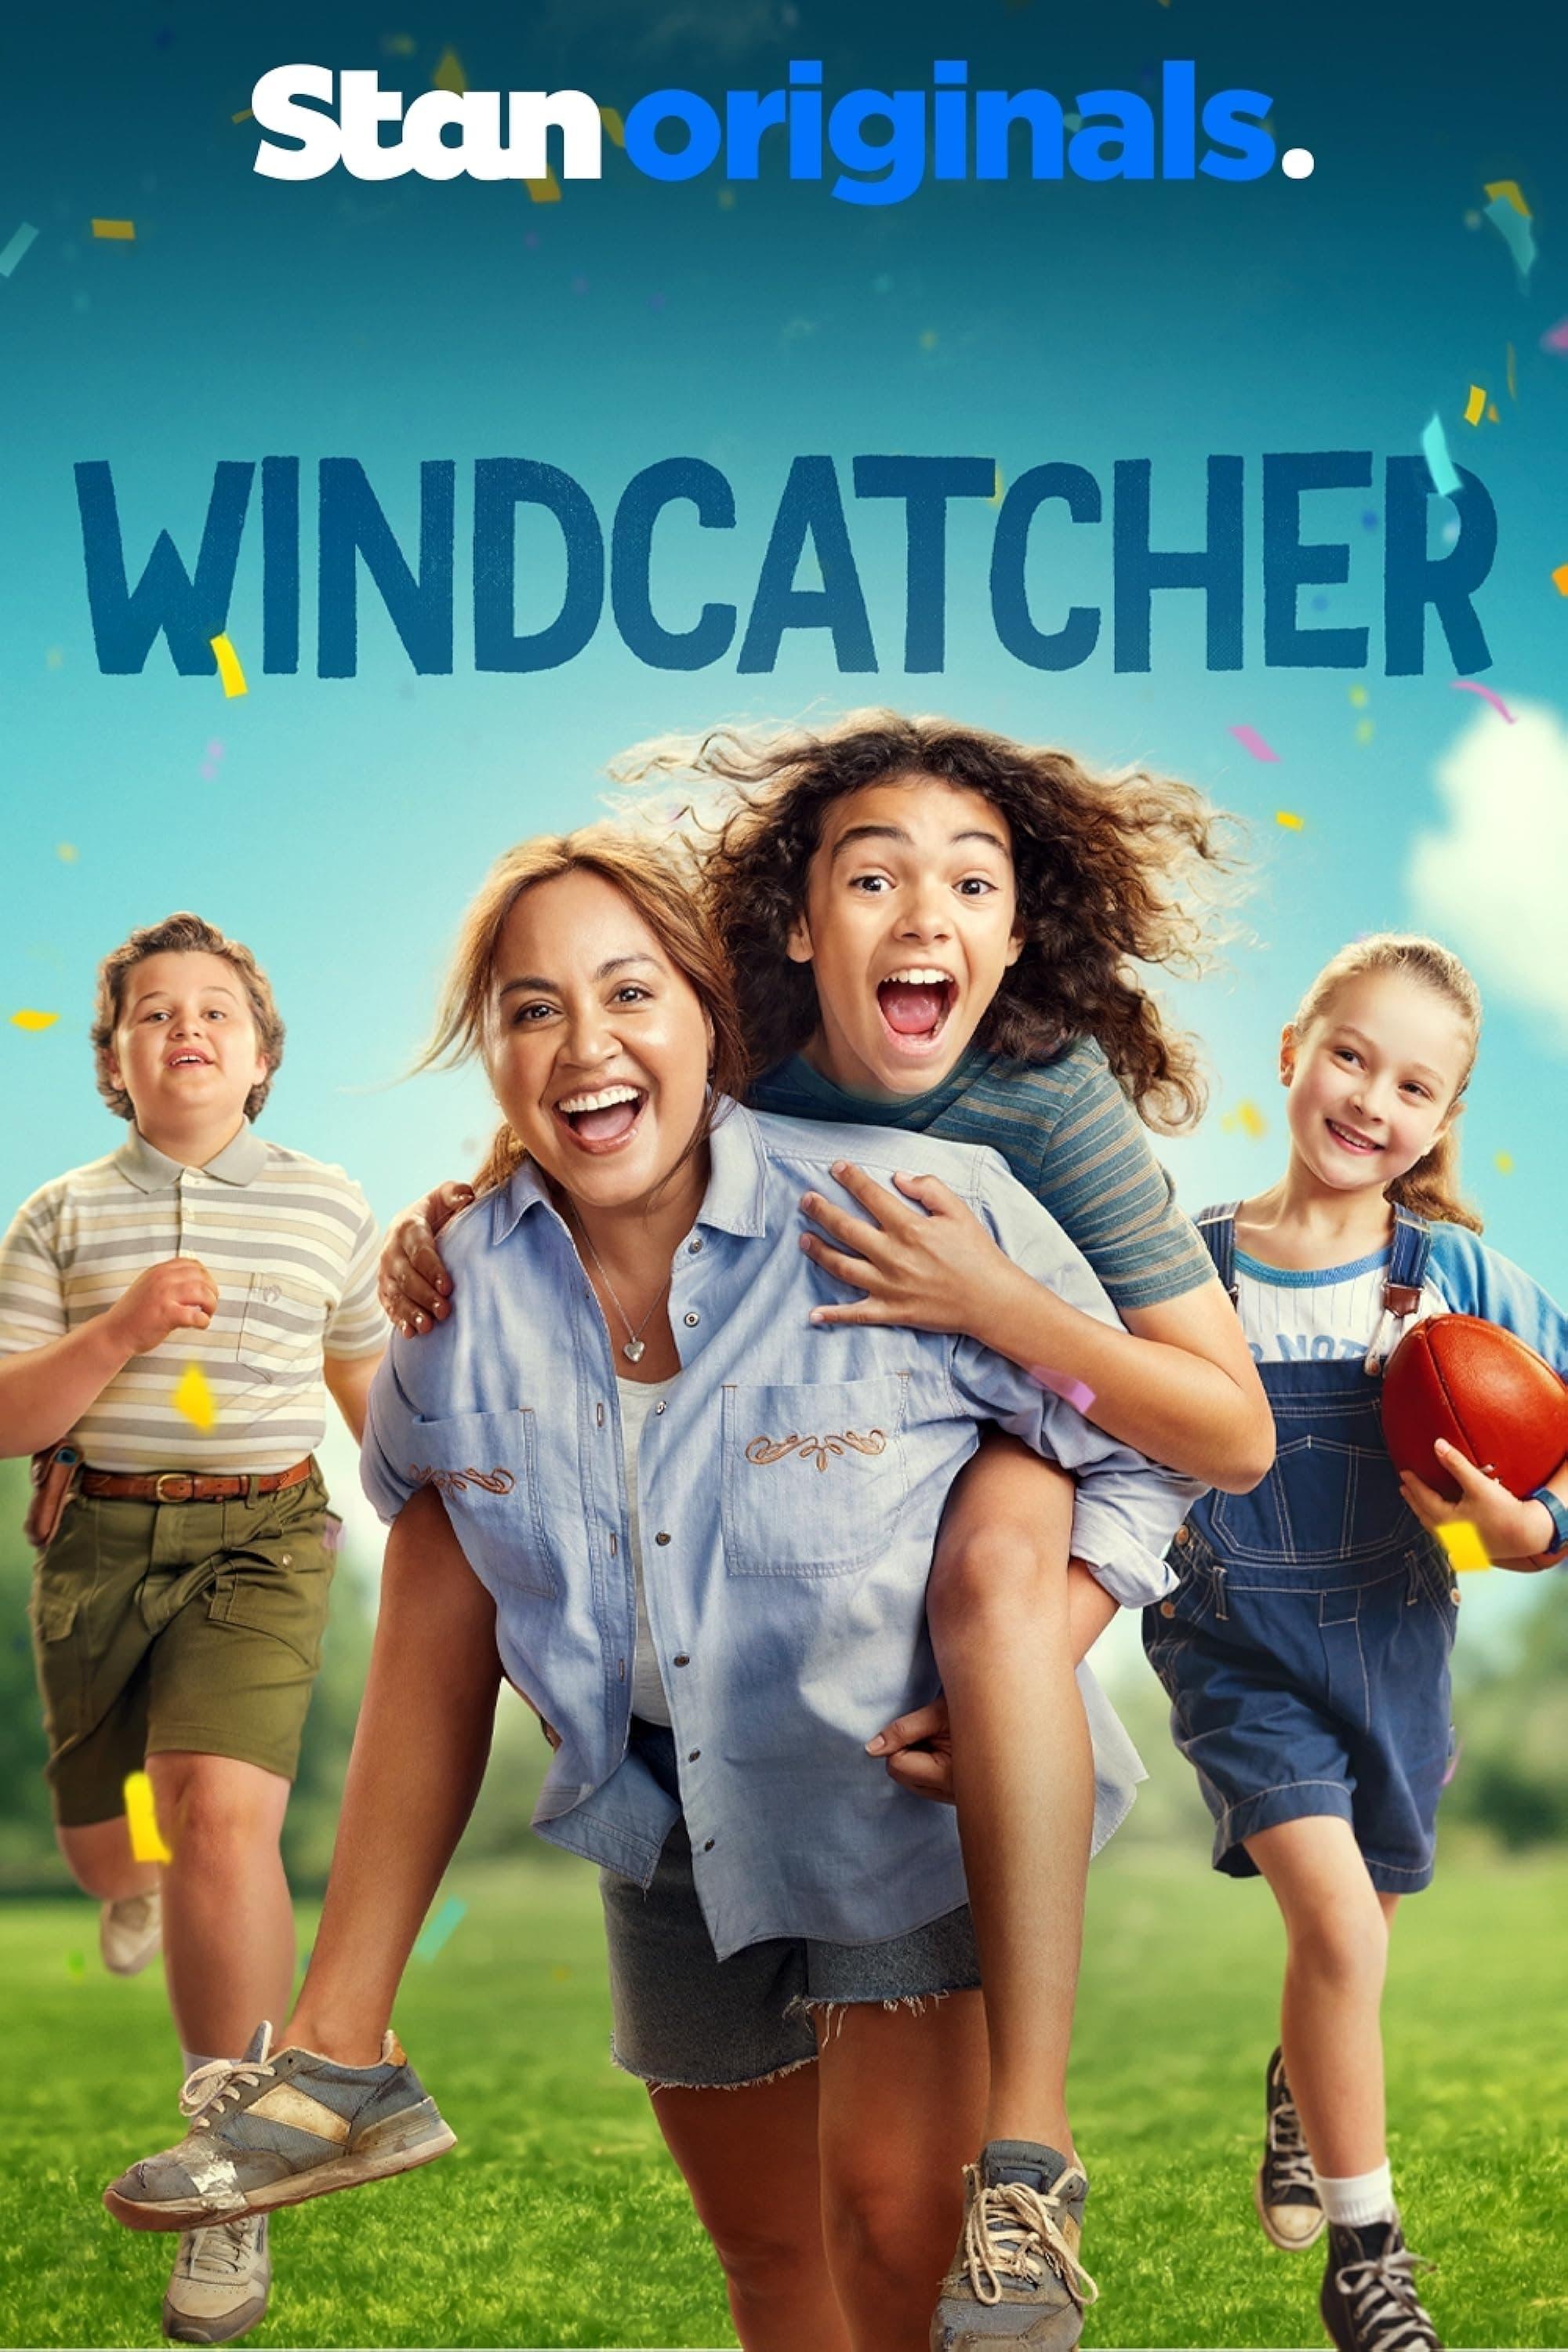 Windcatcher poster